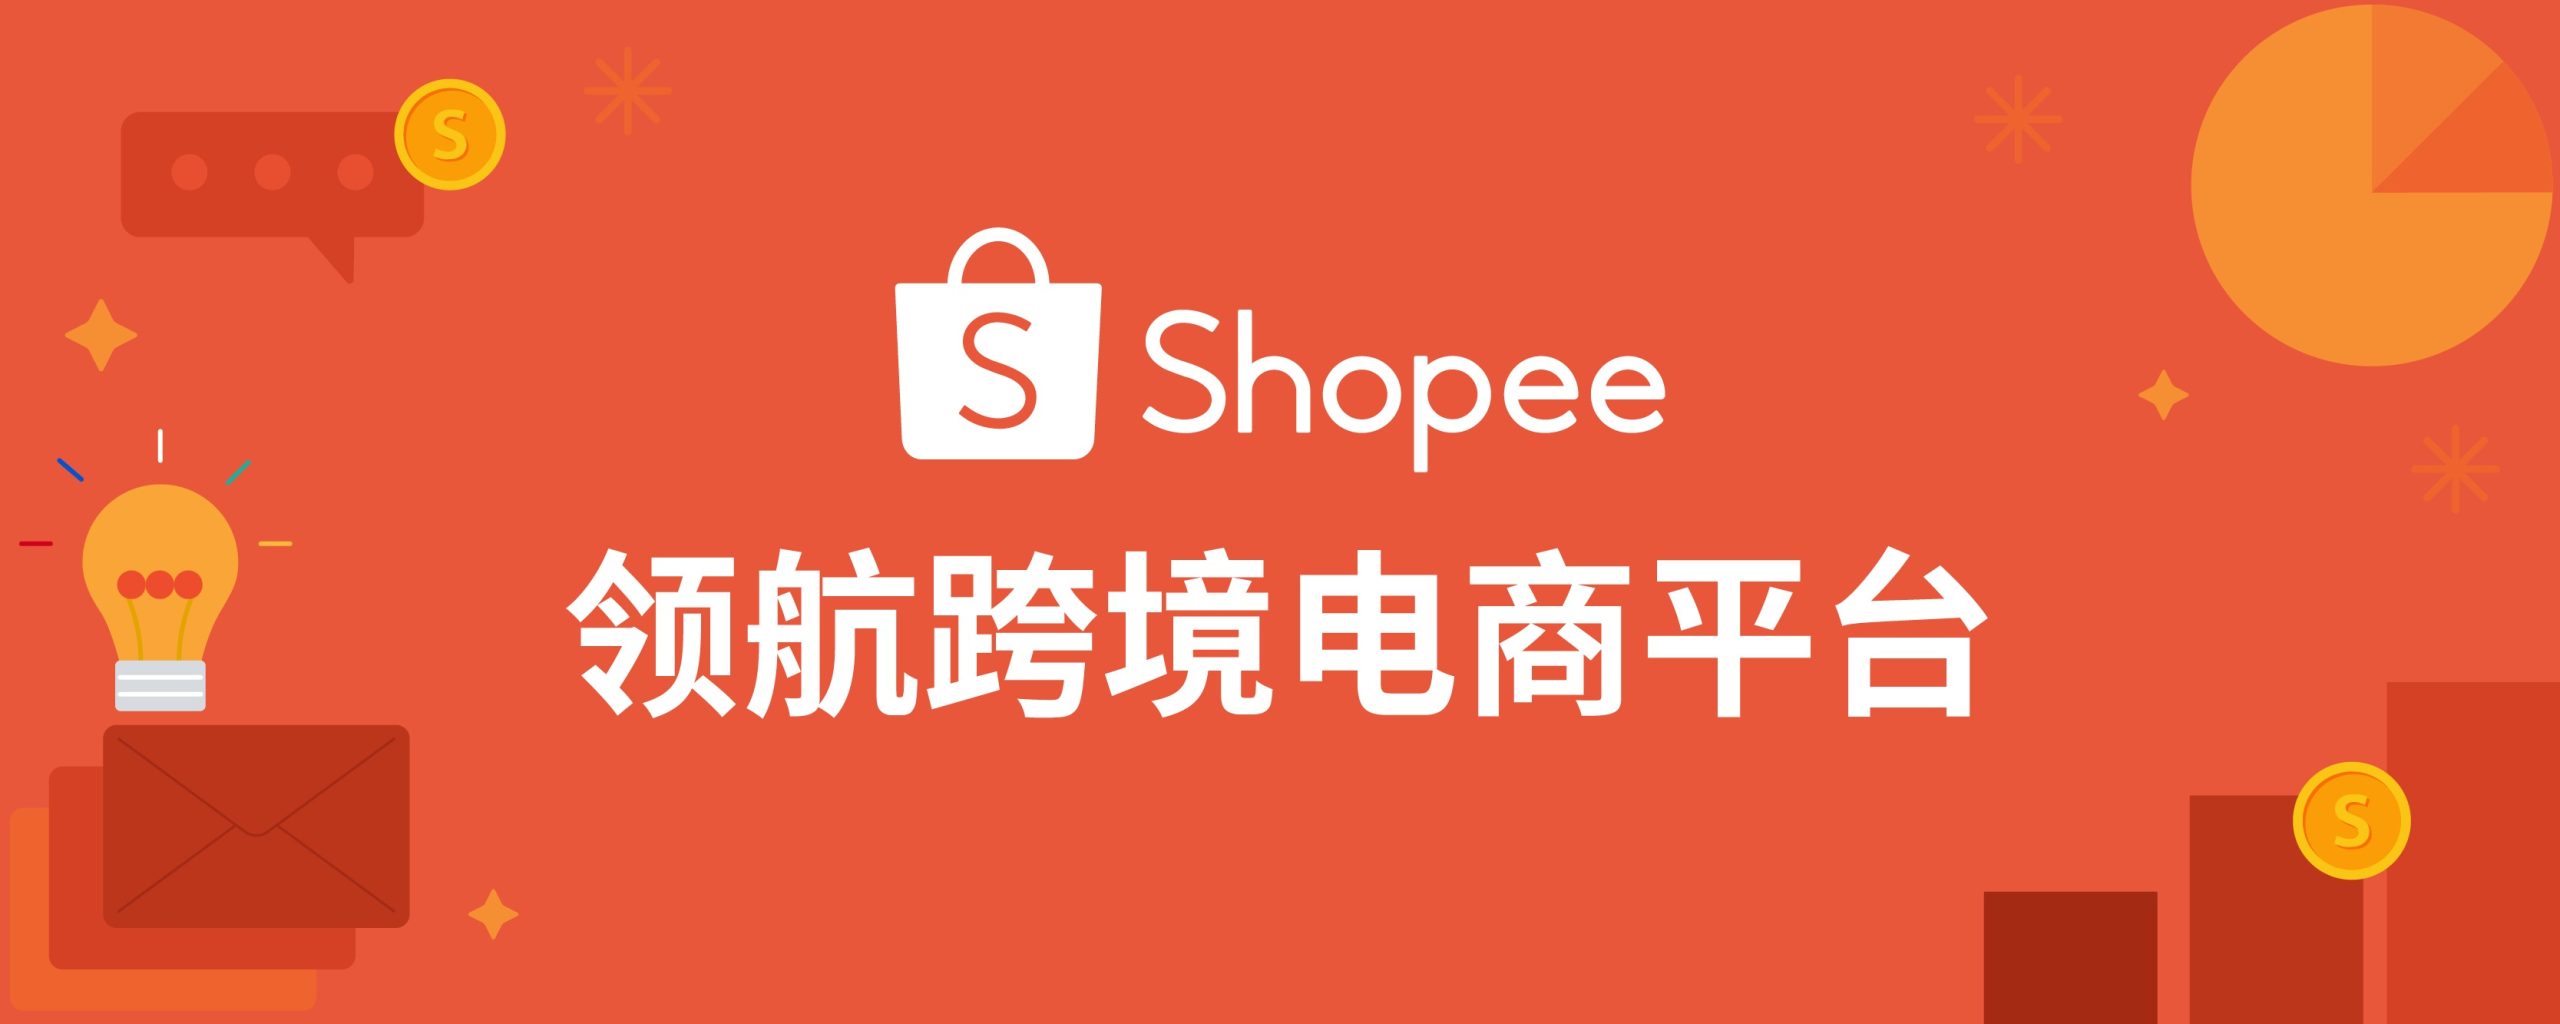 Shopee是什么电商平台,Shopee平台解读